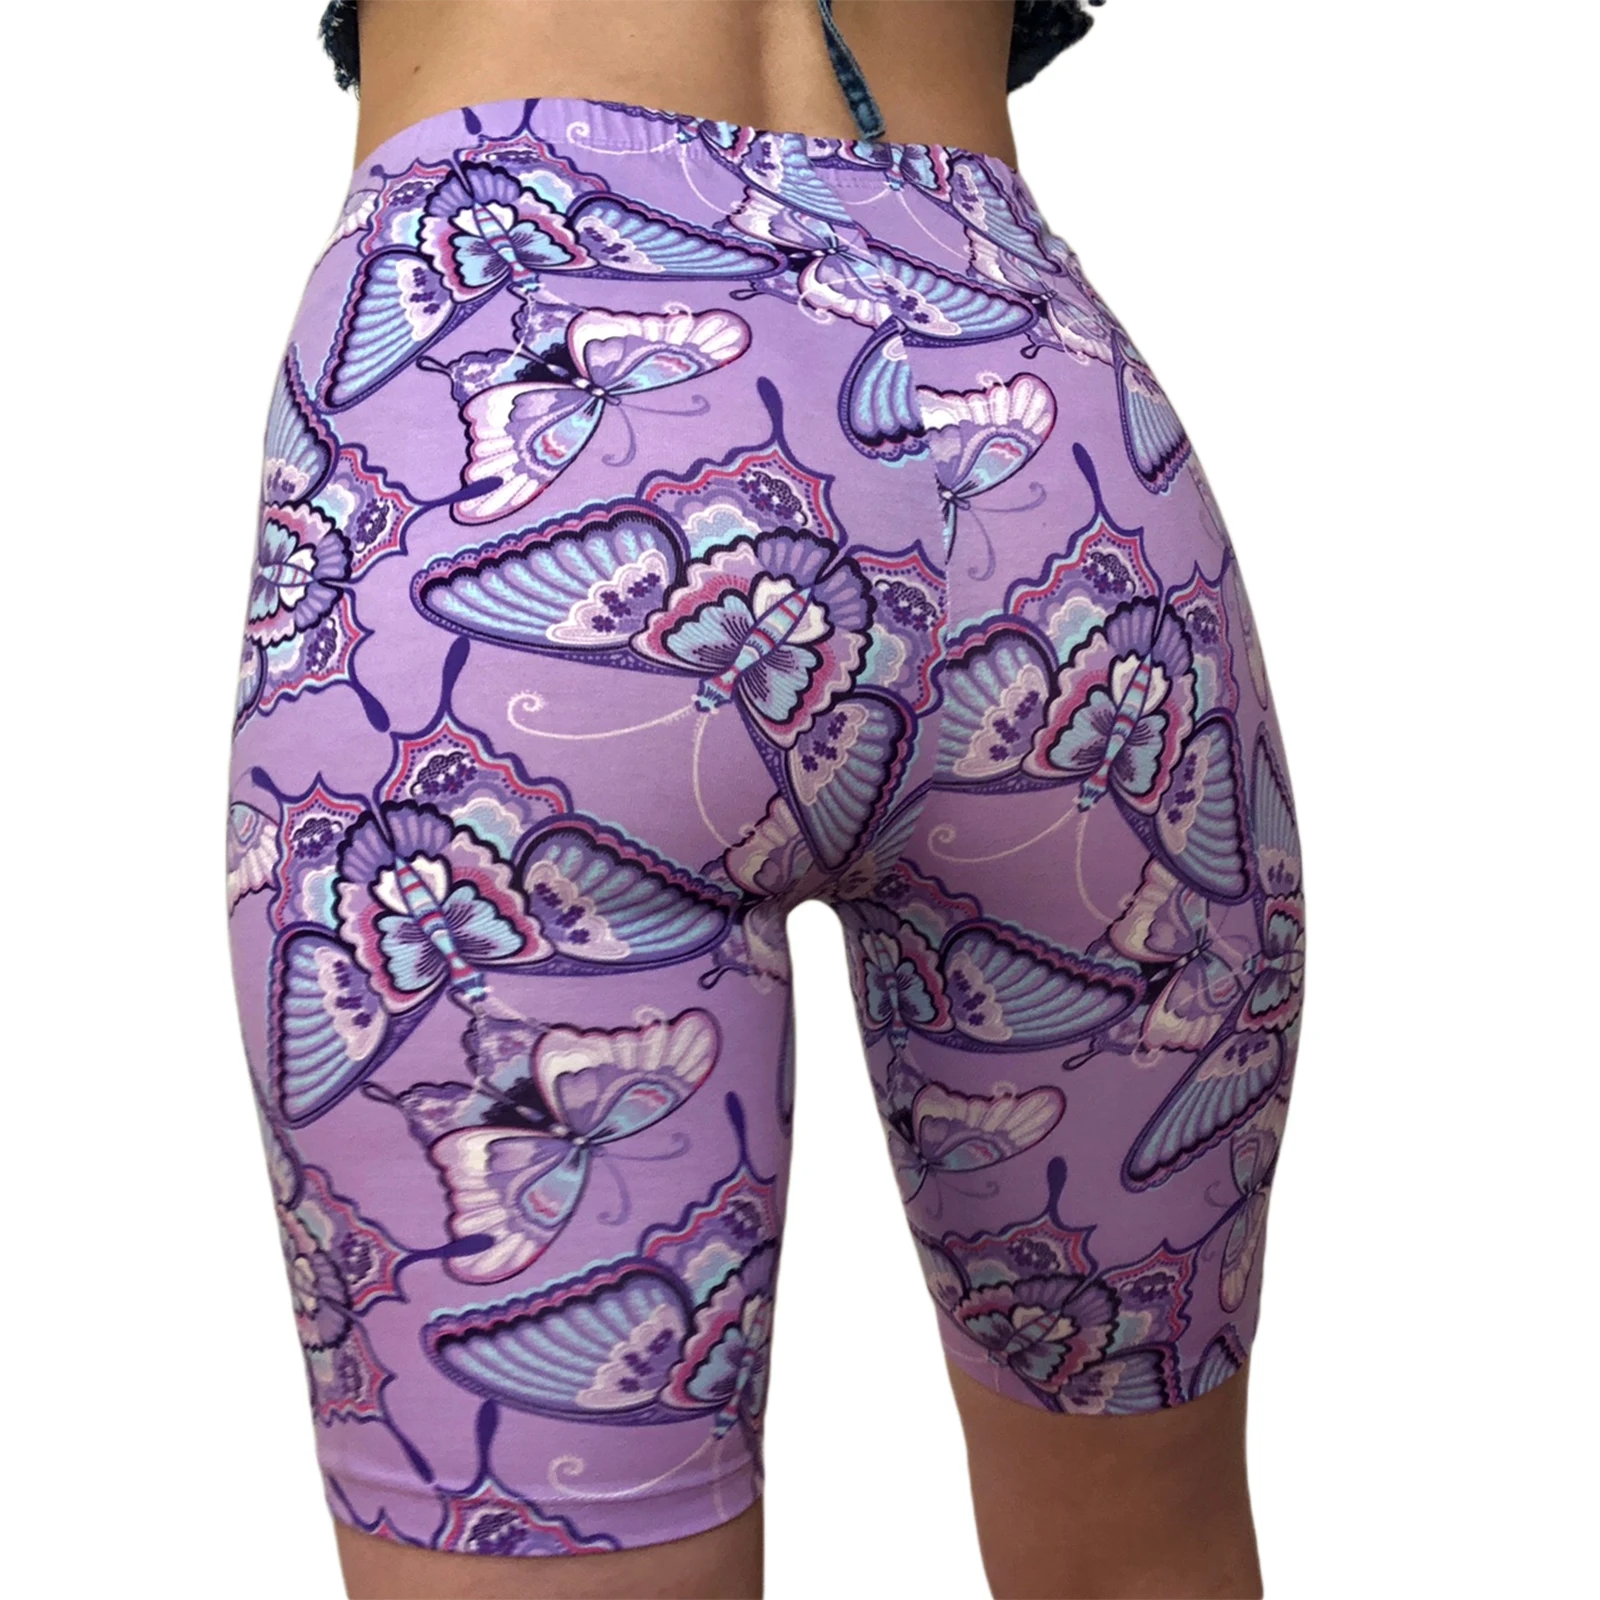 HIRIGIN Sexy Women's Mesh Fishnet Shorts Legging Cycling Swim Dance Hot Printed Transparent Bodycon Shorts bike shorts